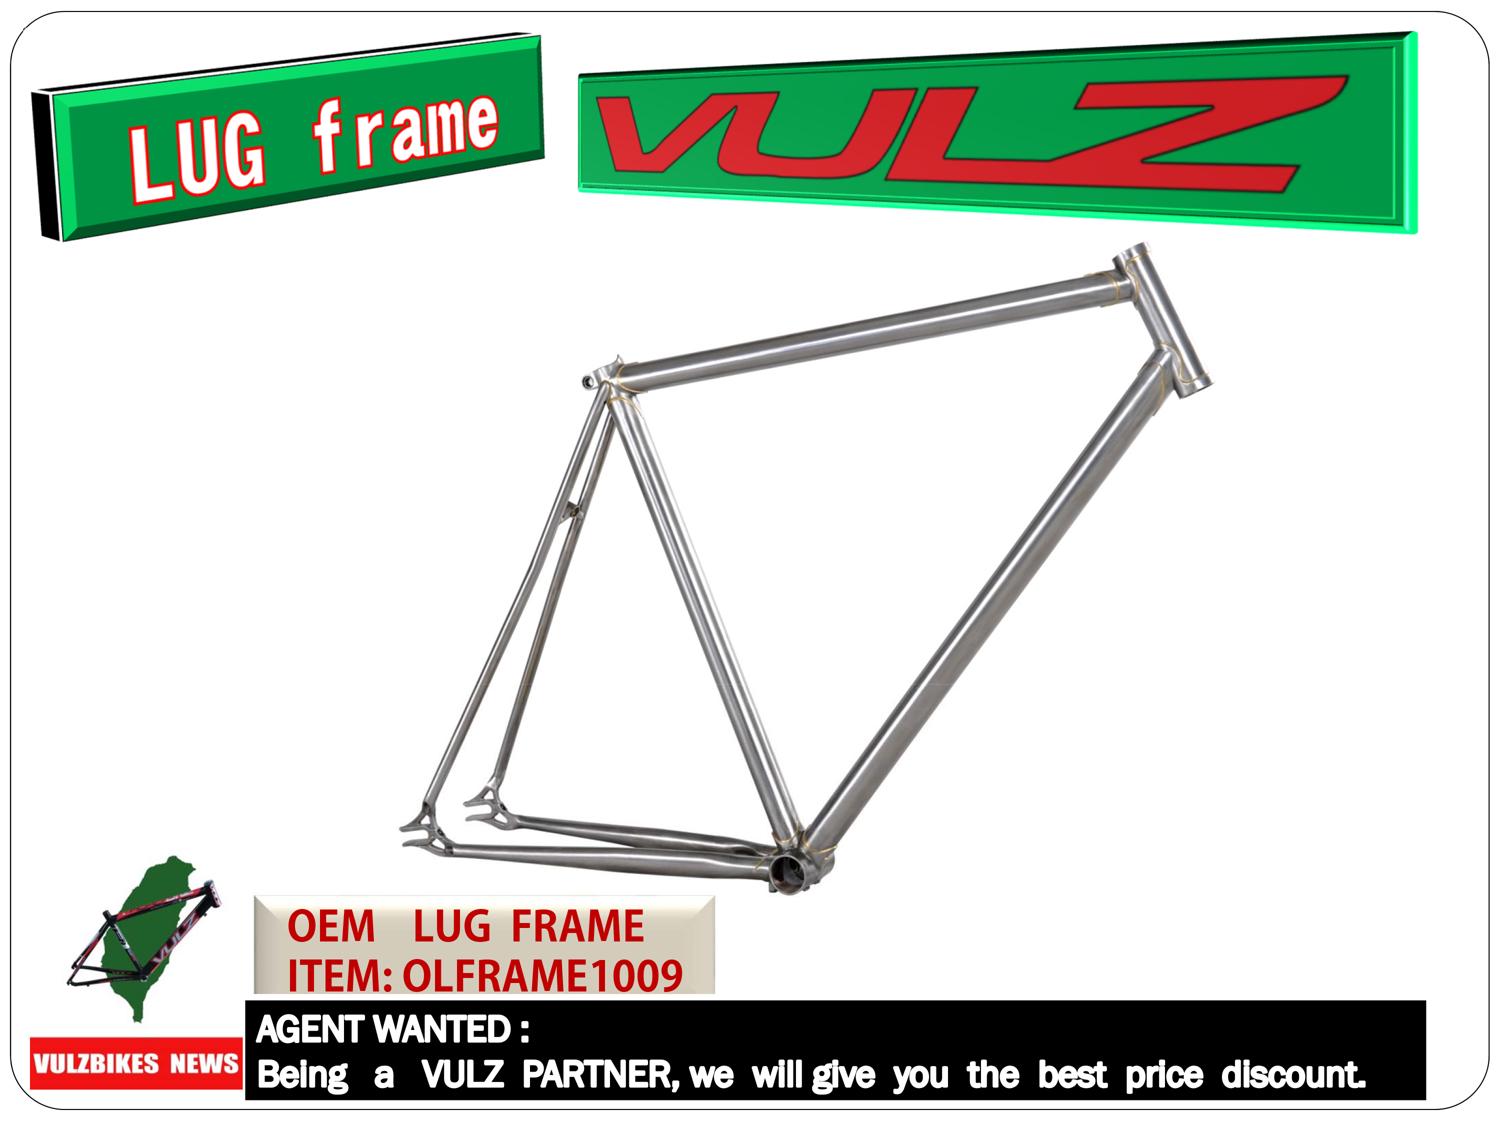 steel bike frame manufacturers